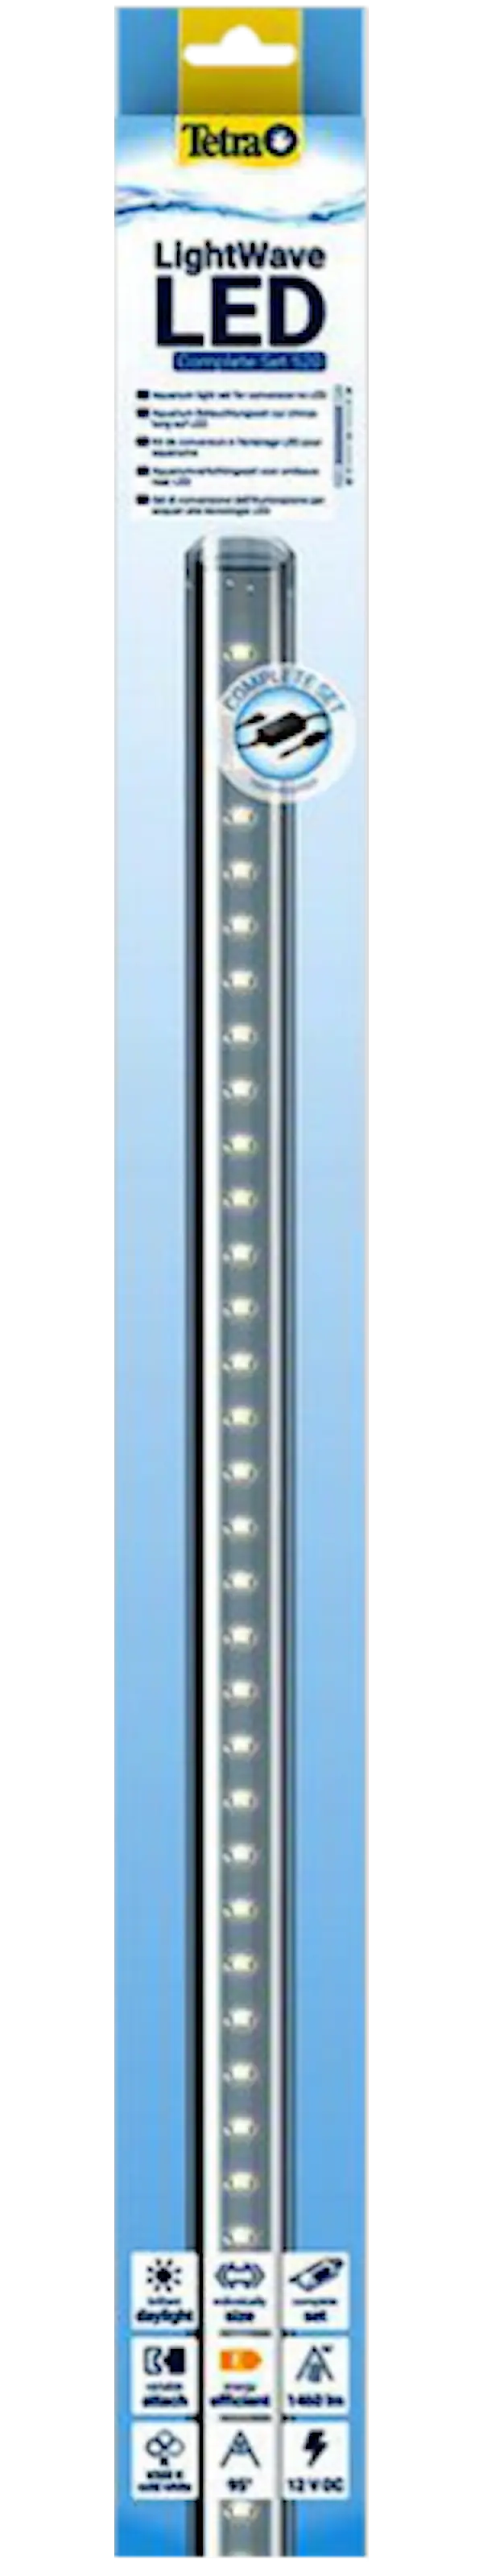 LightWave LED-enkeltlys, 520 - 600 mm